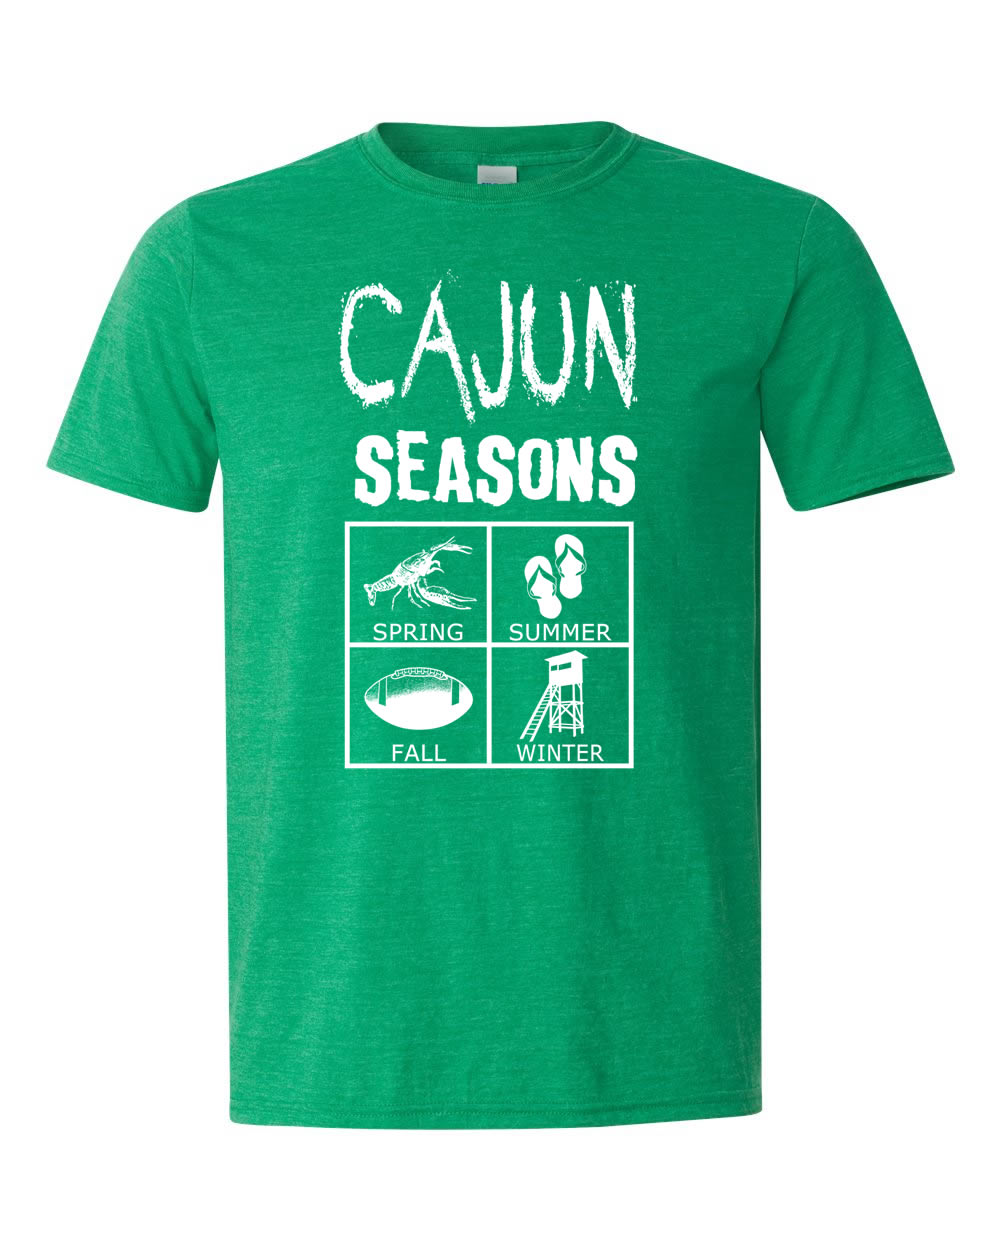 Green: Cajun Seasons